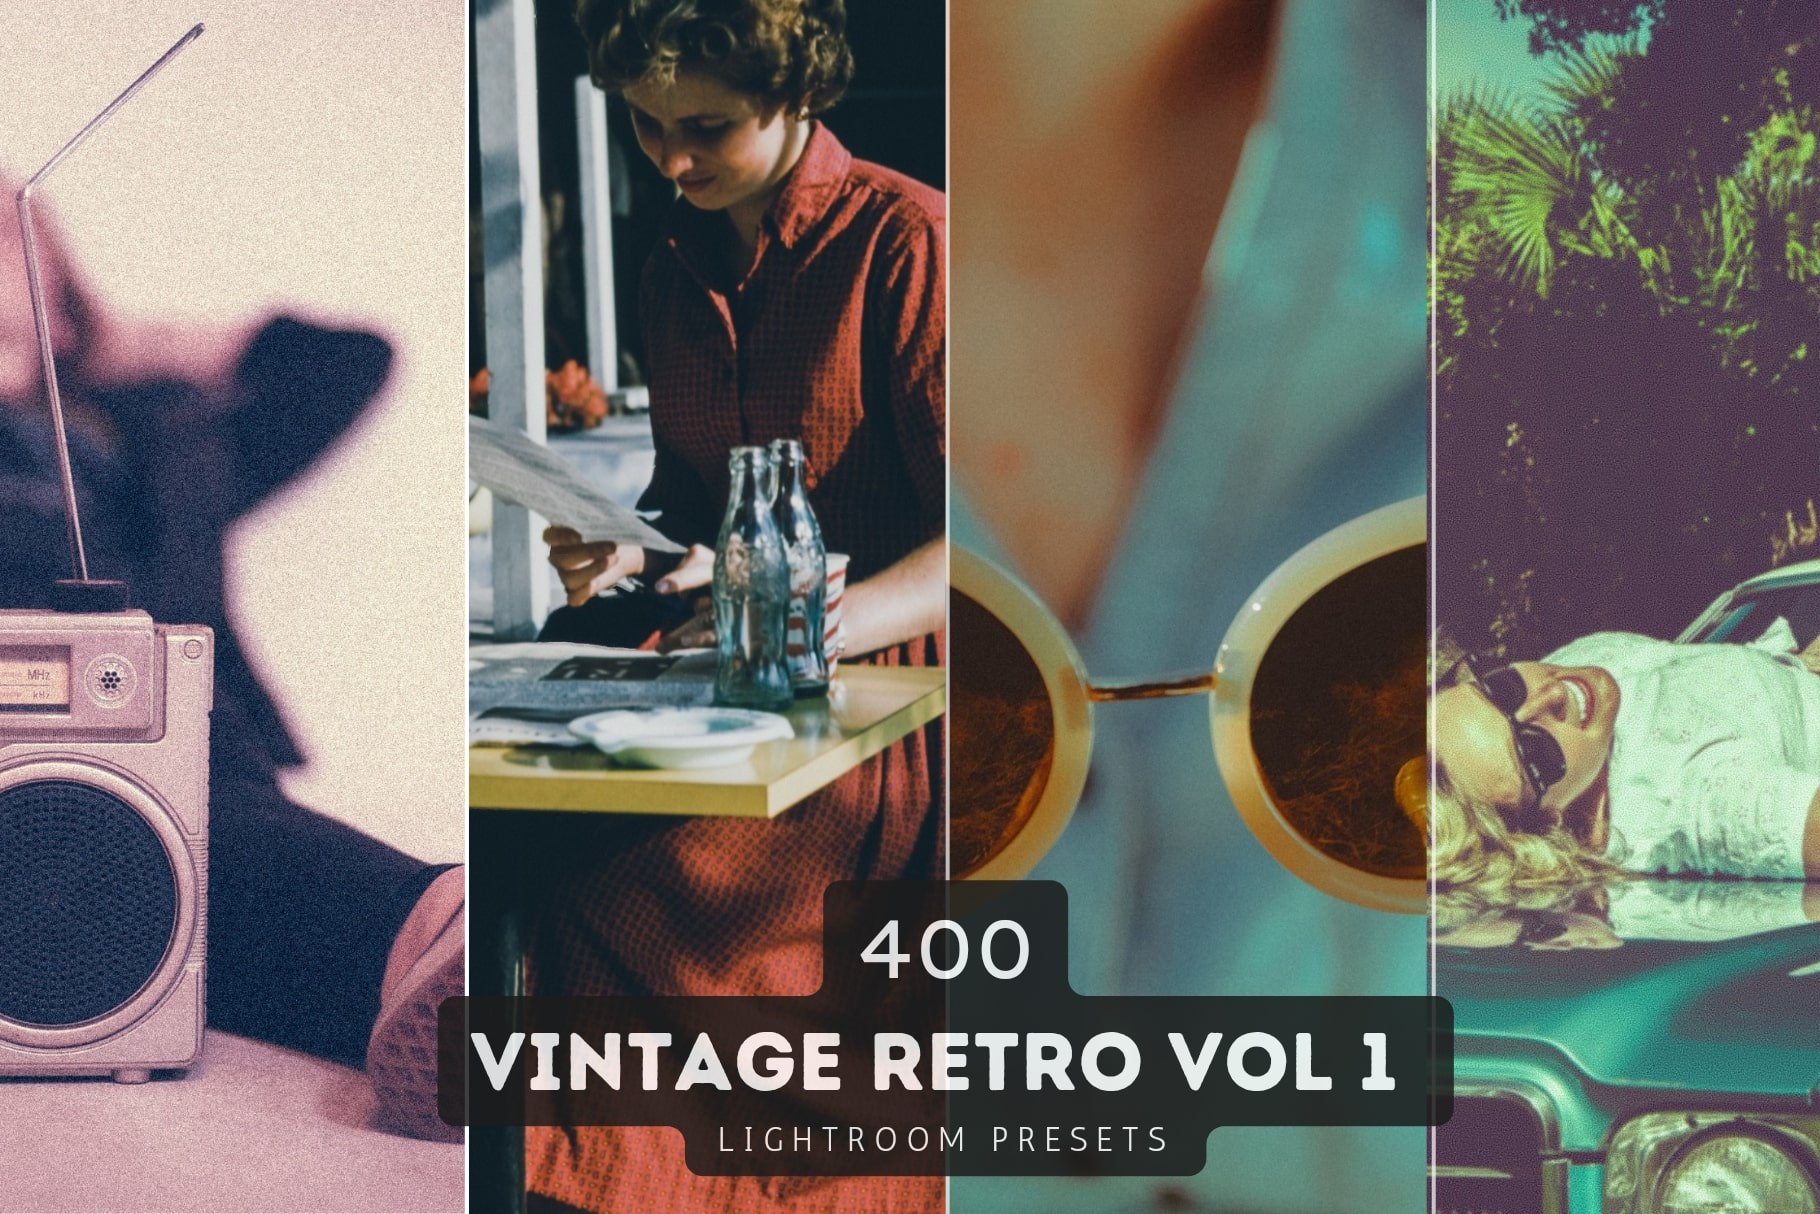 Vintage Retro Lightroom Presets VOL1cover image.